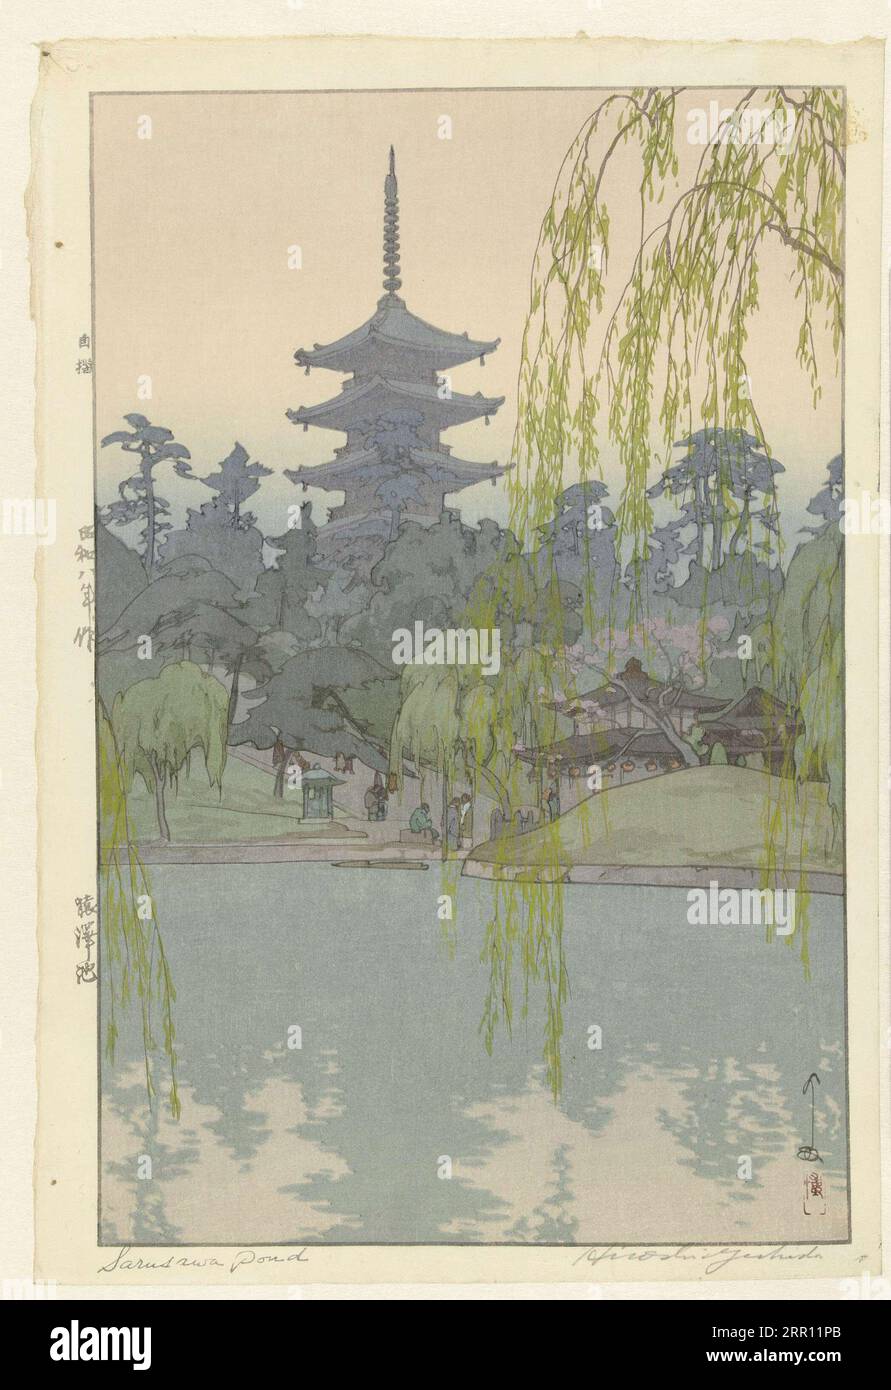 Japanese Art, Print, Landscape, Japan, 19th century, Woodcut print, Stock Photo